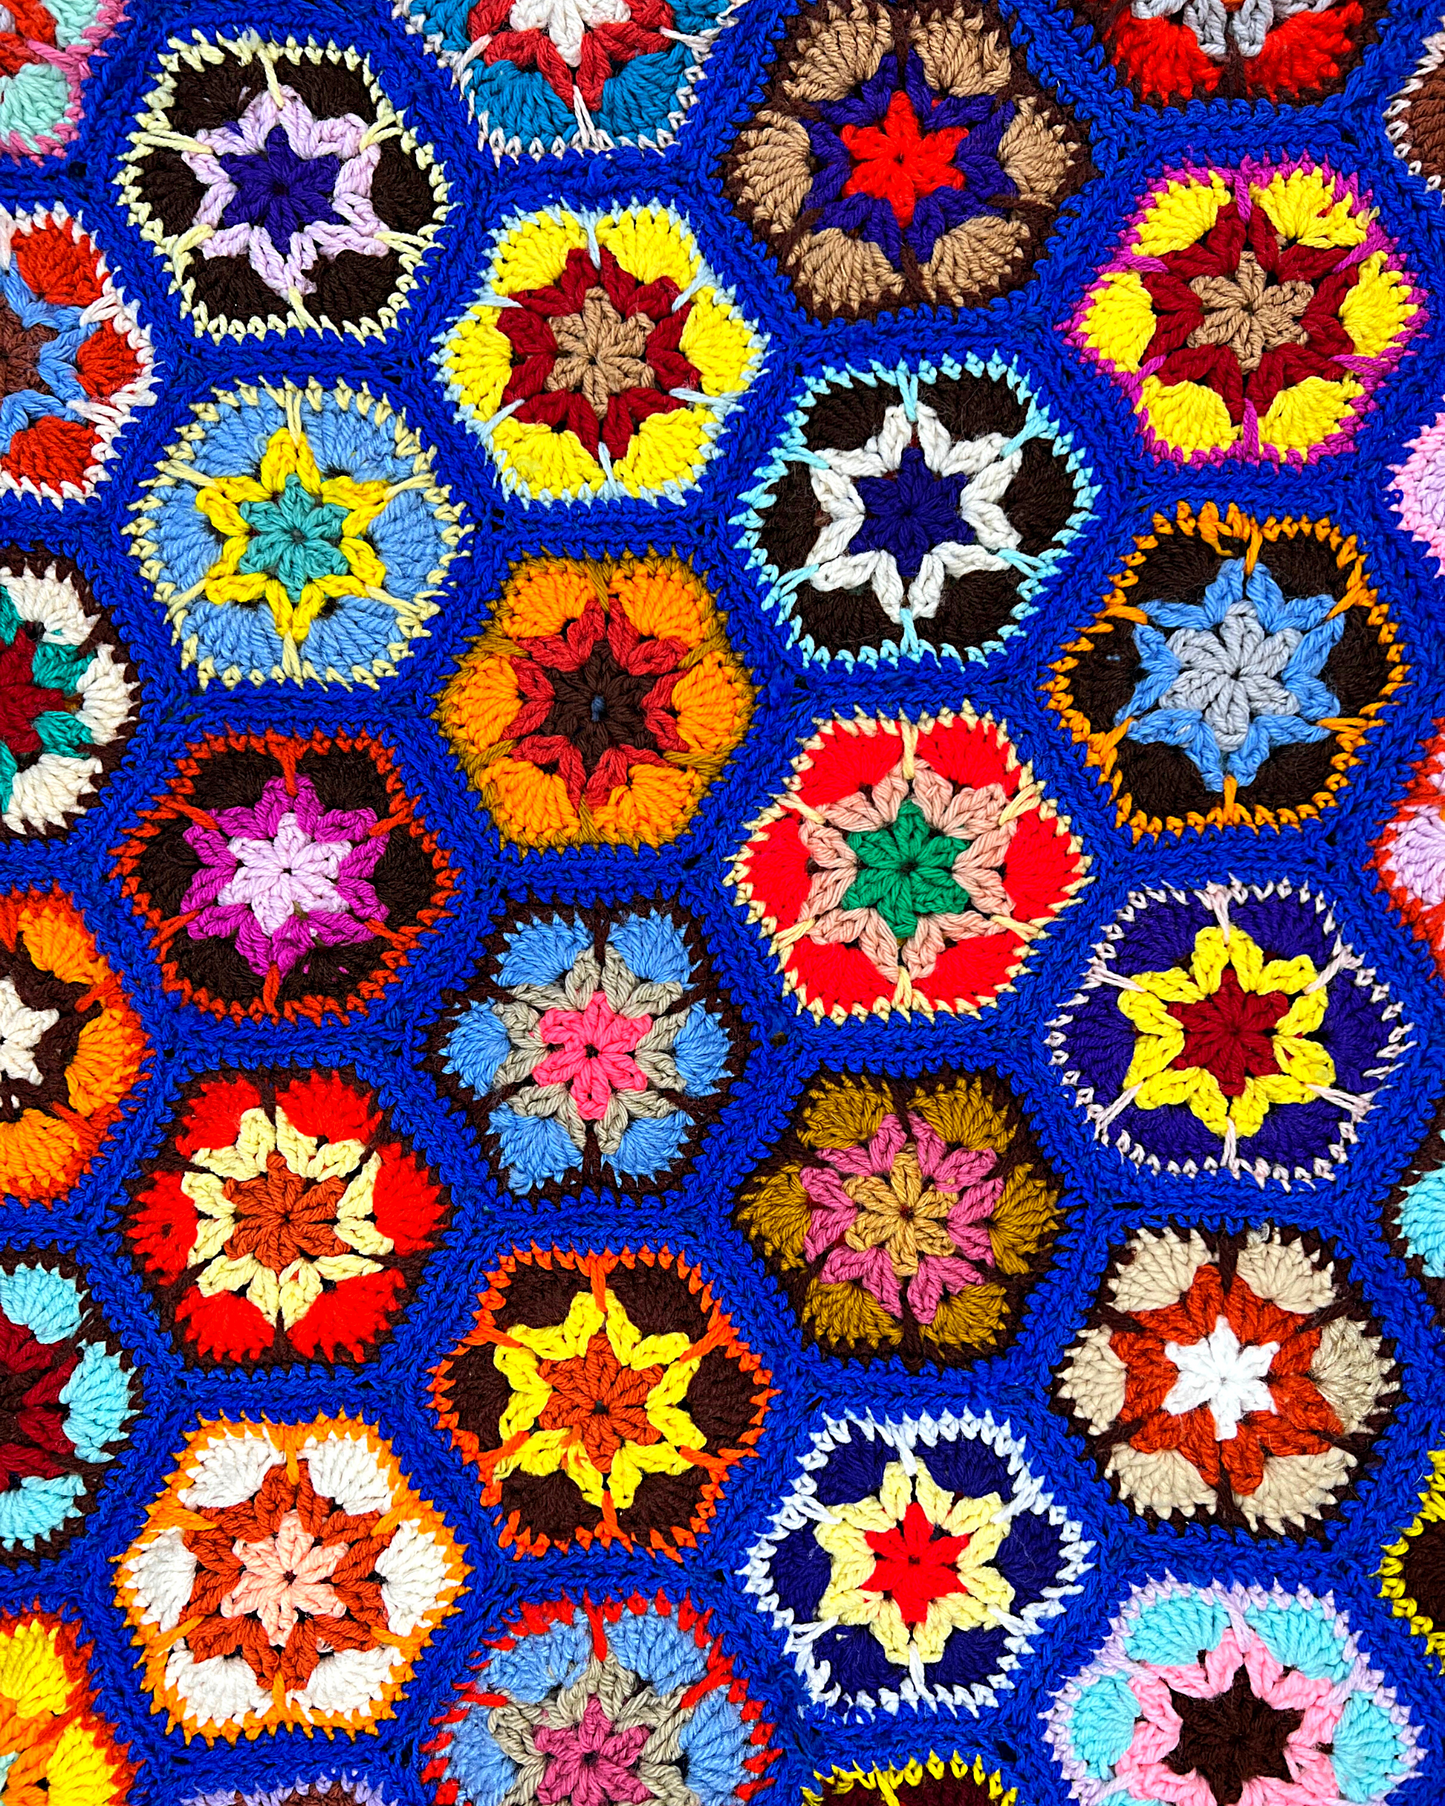 70’s Retro Rainbow Flower Granny Square Crocheted 62 x 52 Afghan Throw Blanket